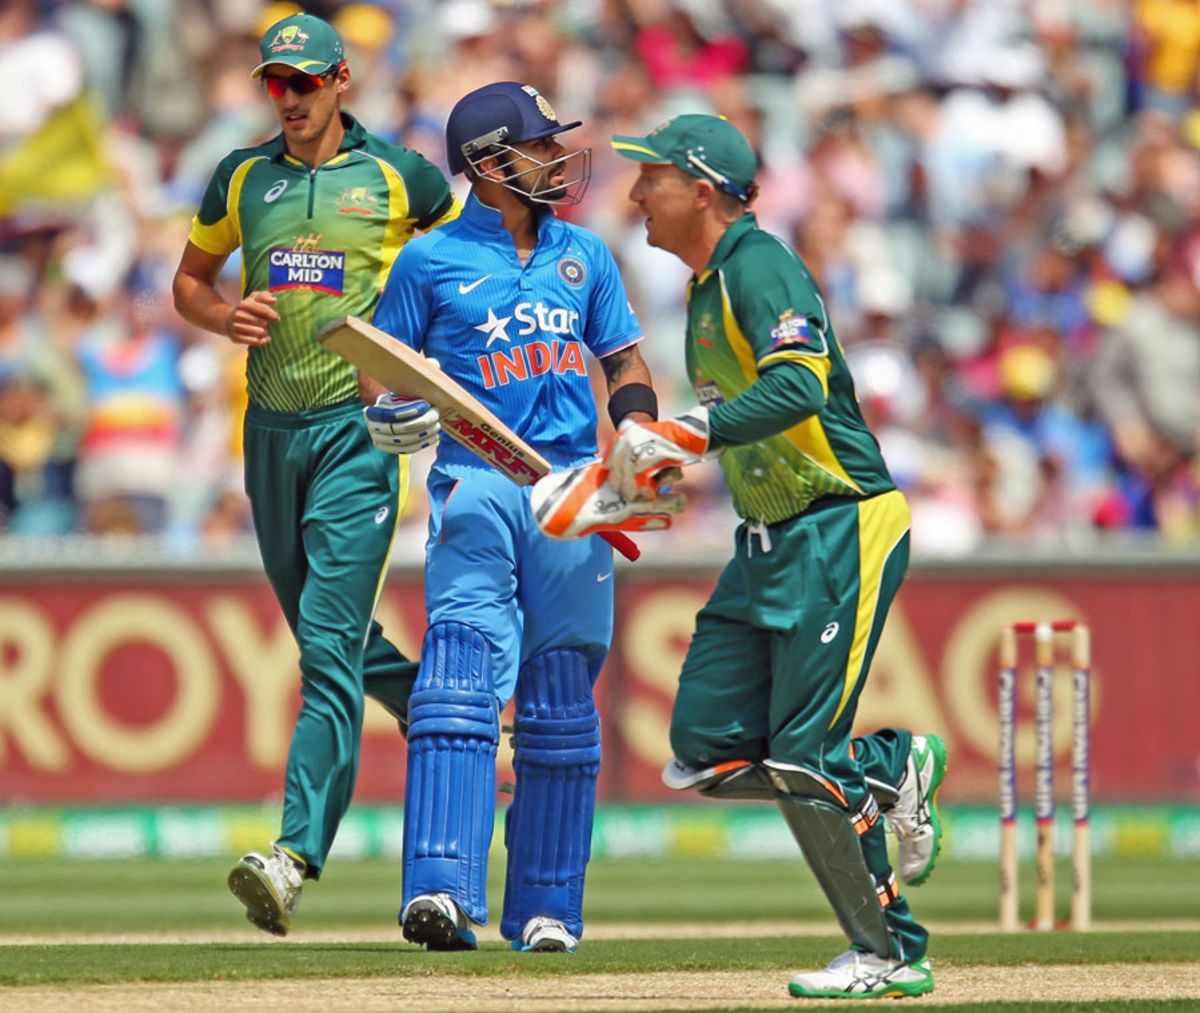 Virat Kohli was dismissed for 9, Australia v India, Carlton Mid Tri-series, Melbourne, January 18, 2015